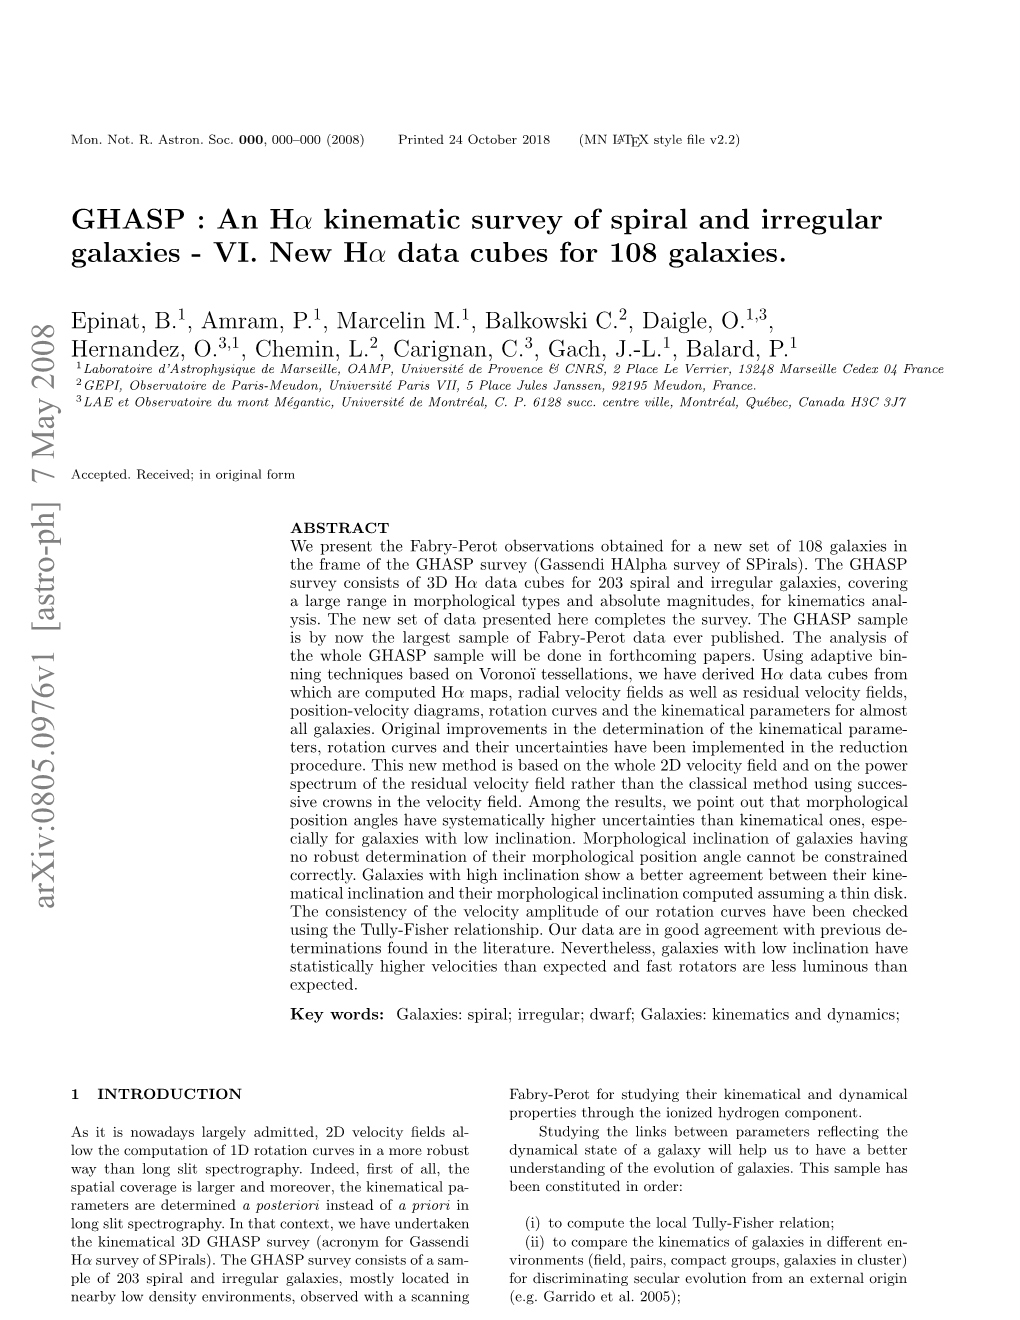 GHASP: an Halpha Kinematic Survey of Spiral and Irregular Galaxies-VI